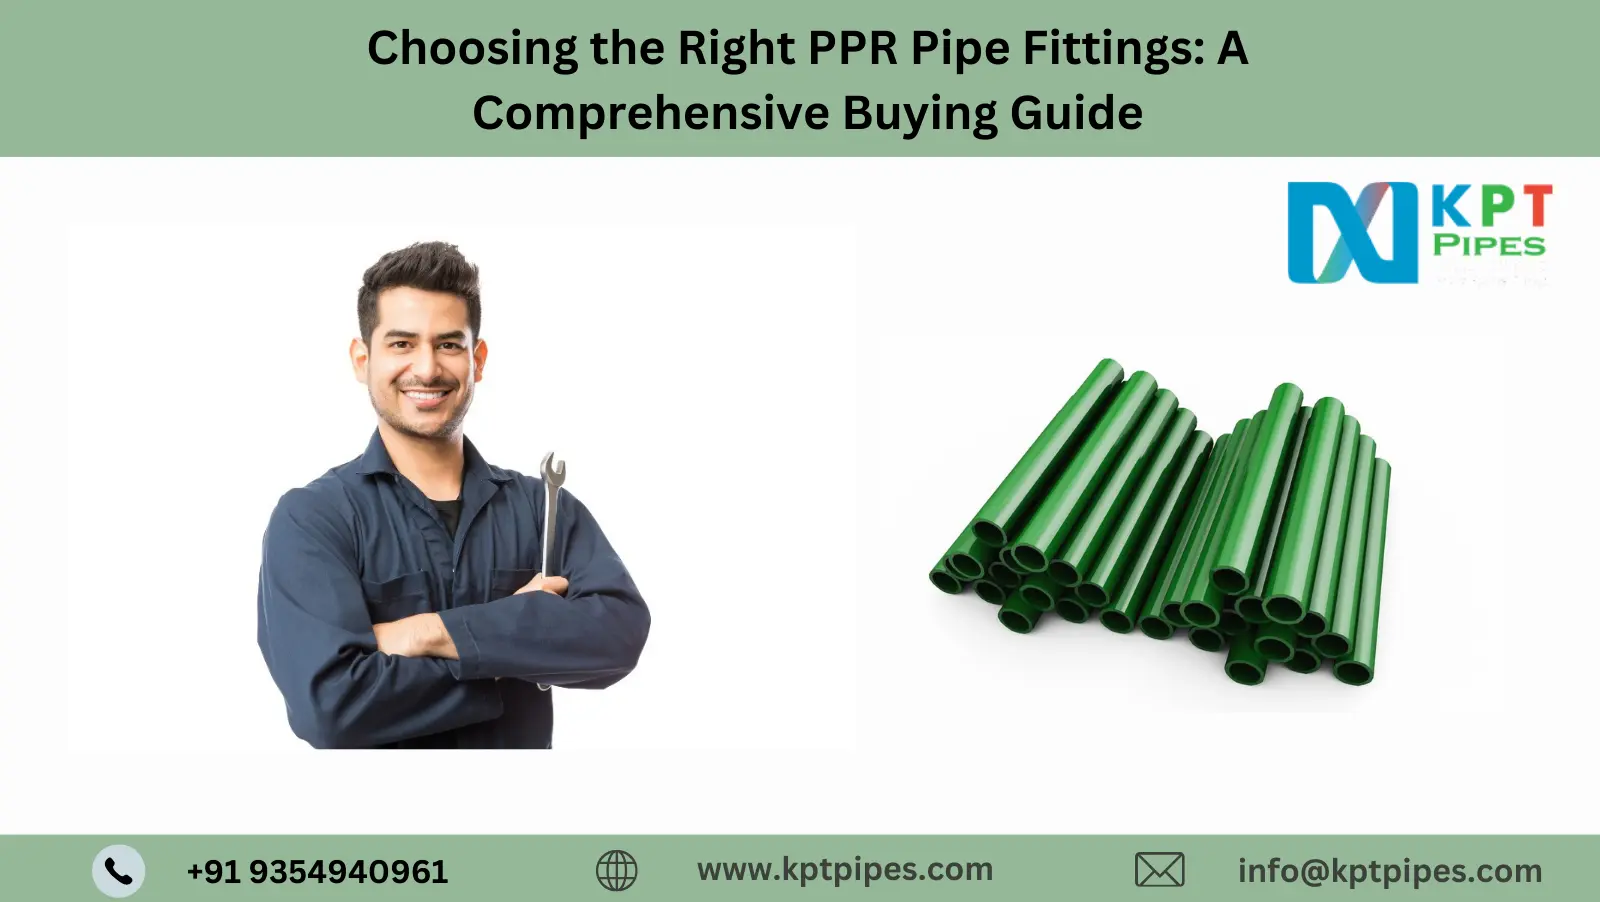 PPR Pipe Fittings